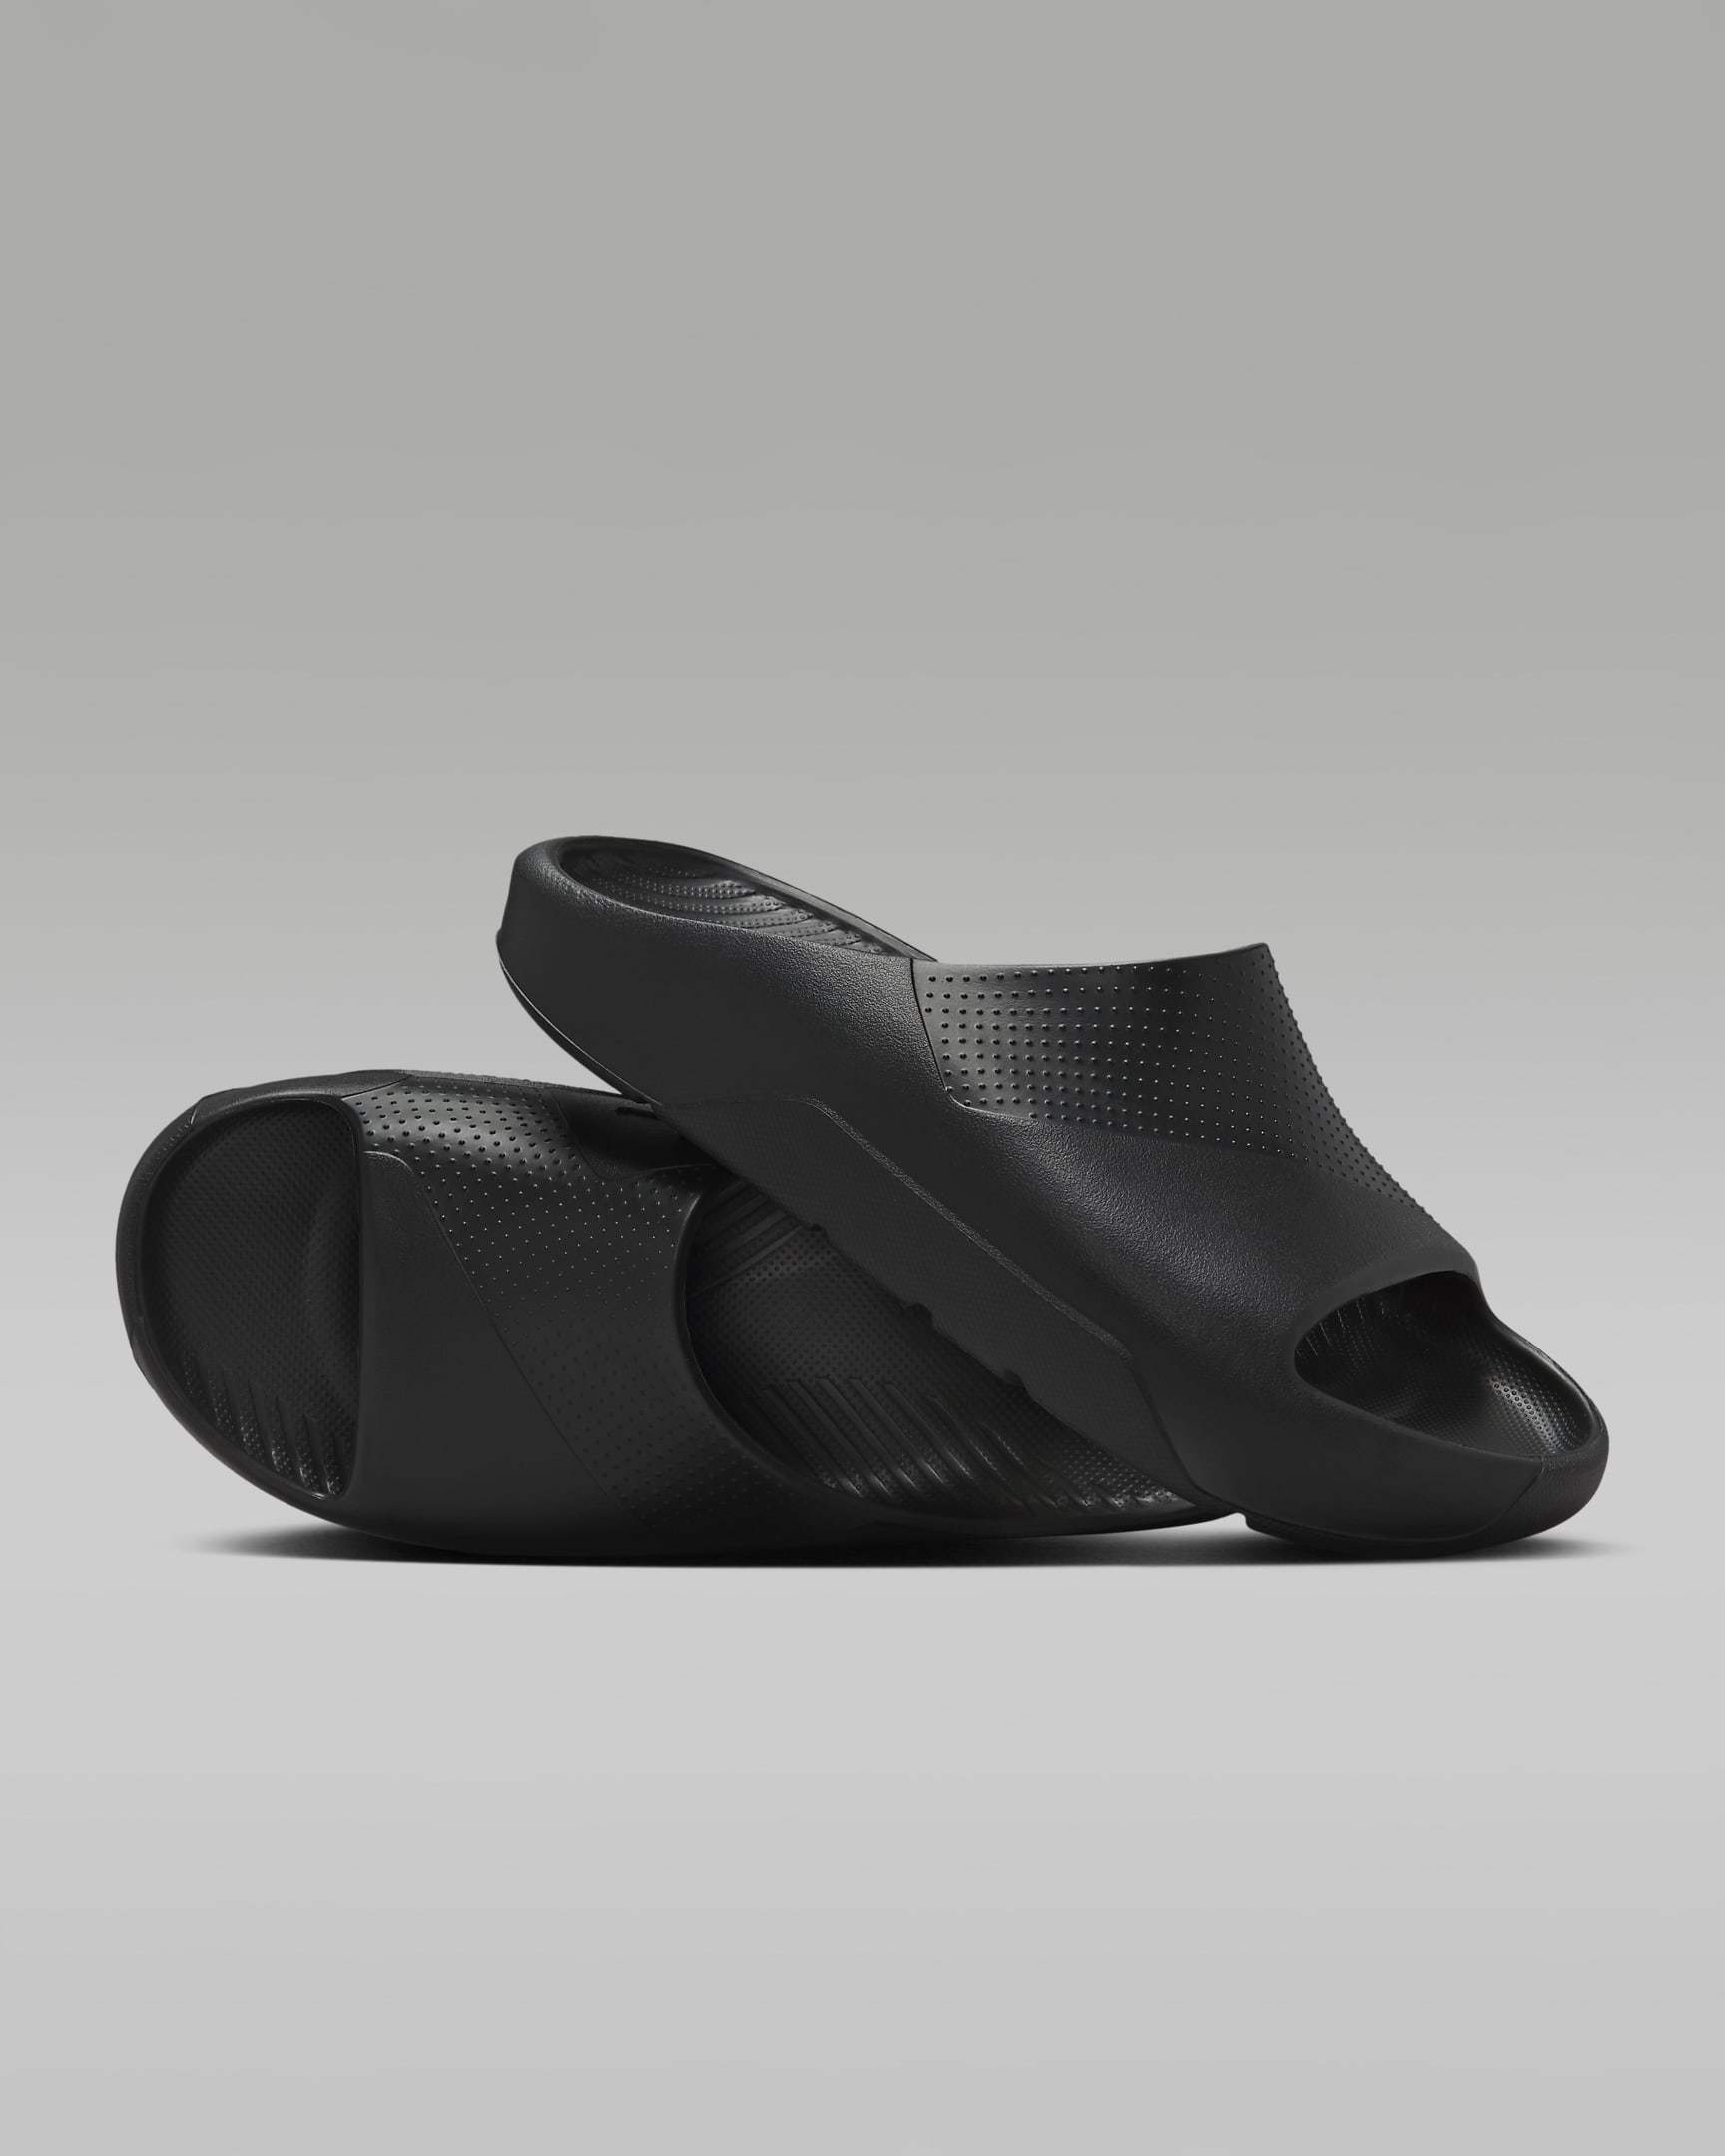 Jordan Post Men's Slides - Black/Black